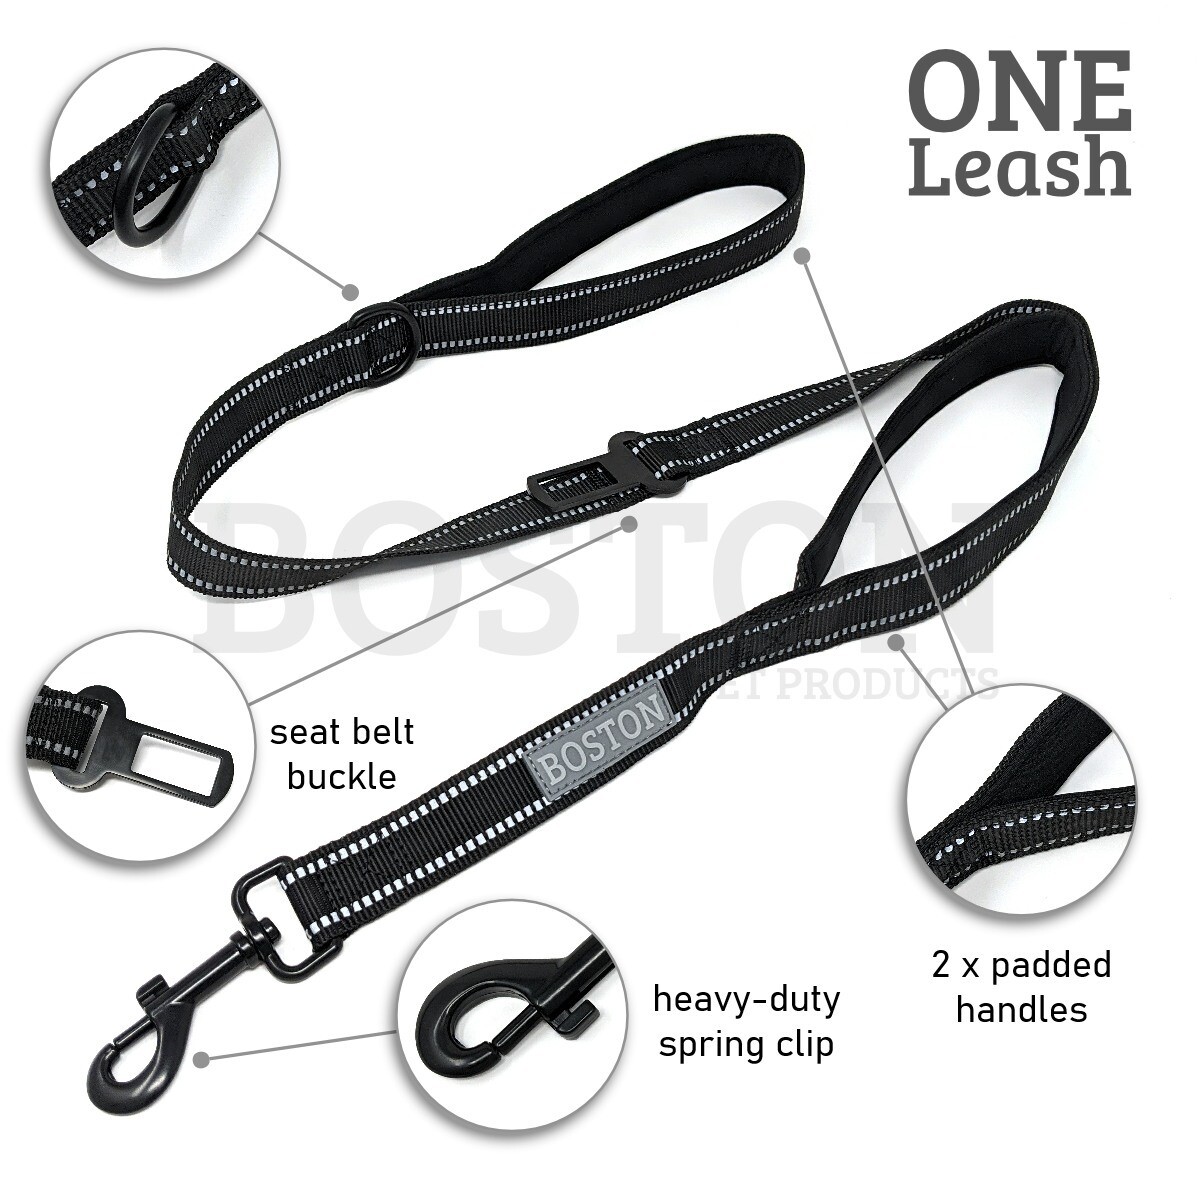 ONE leash